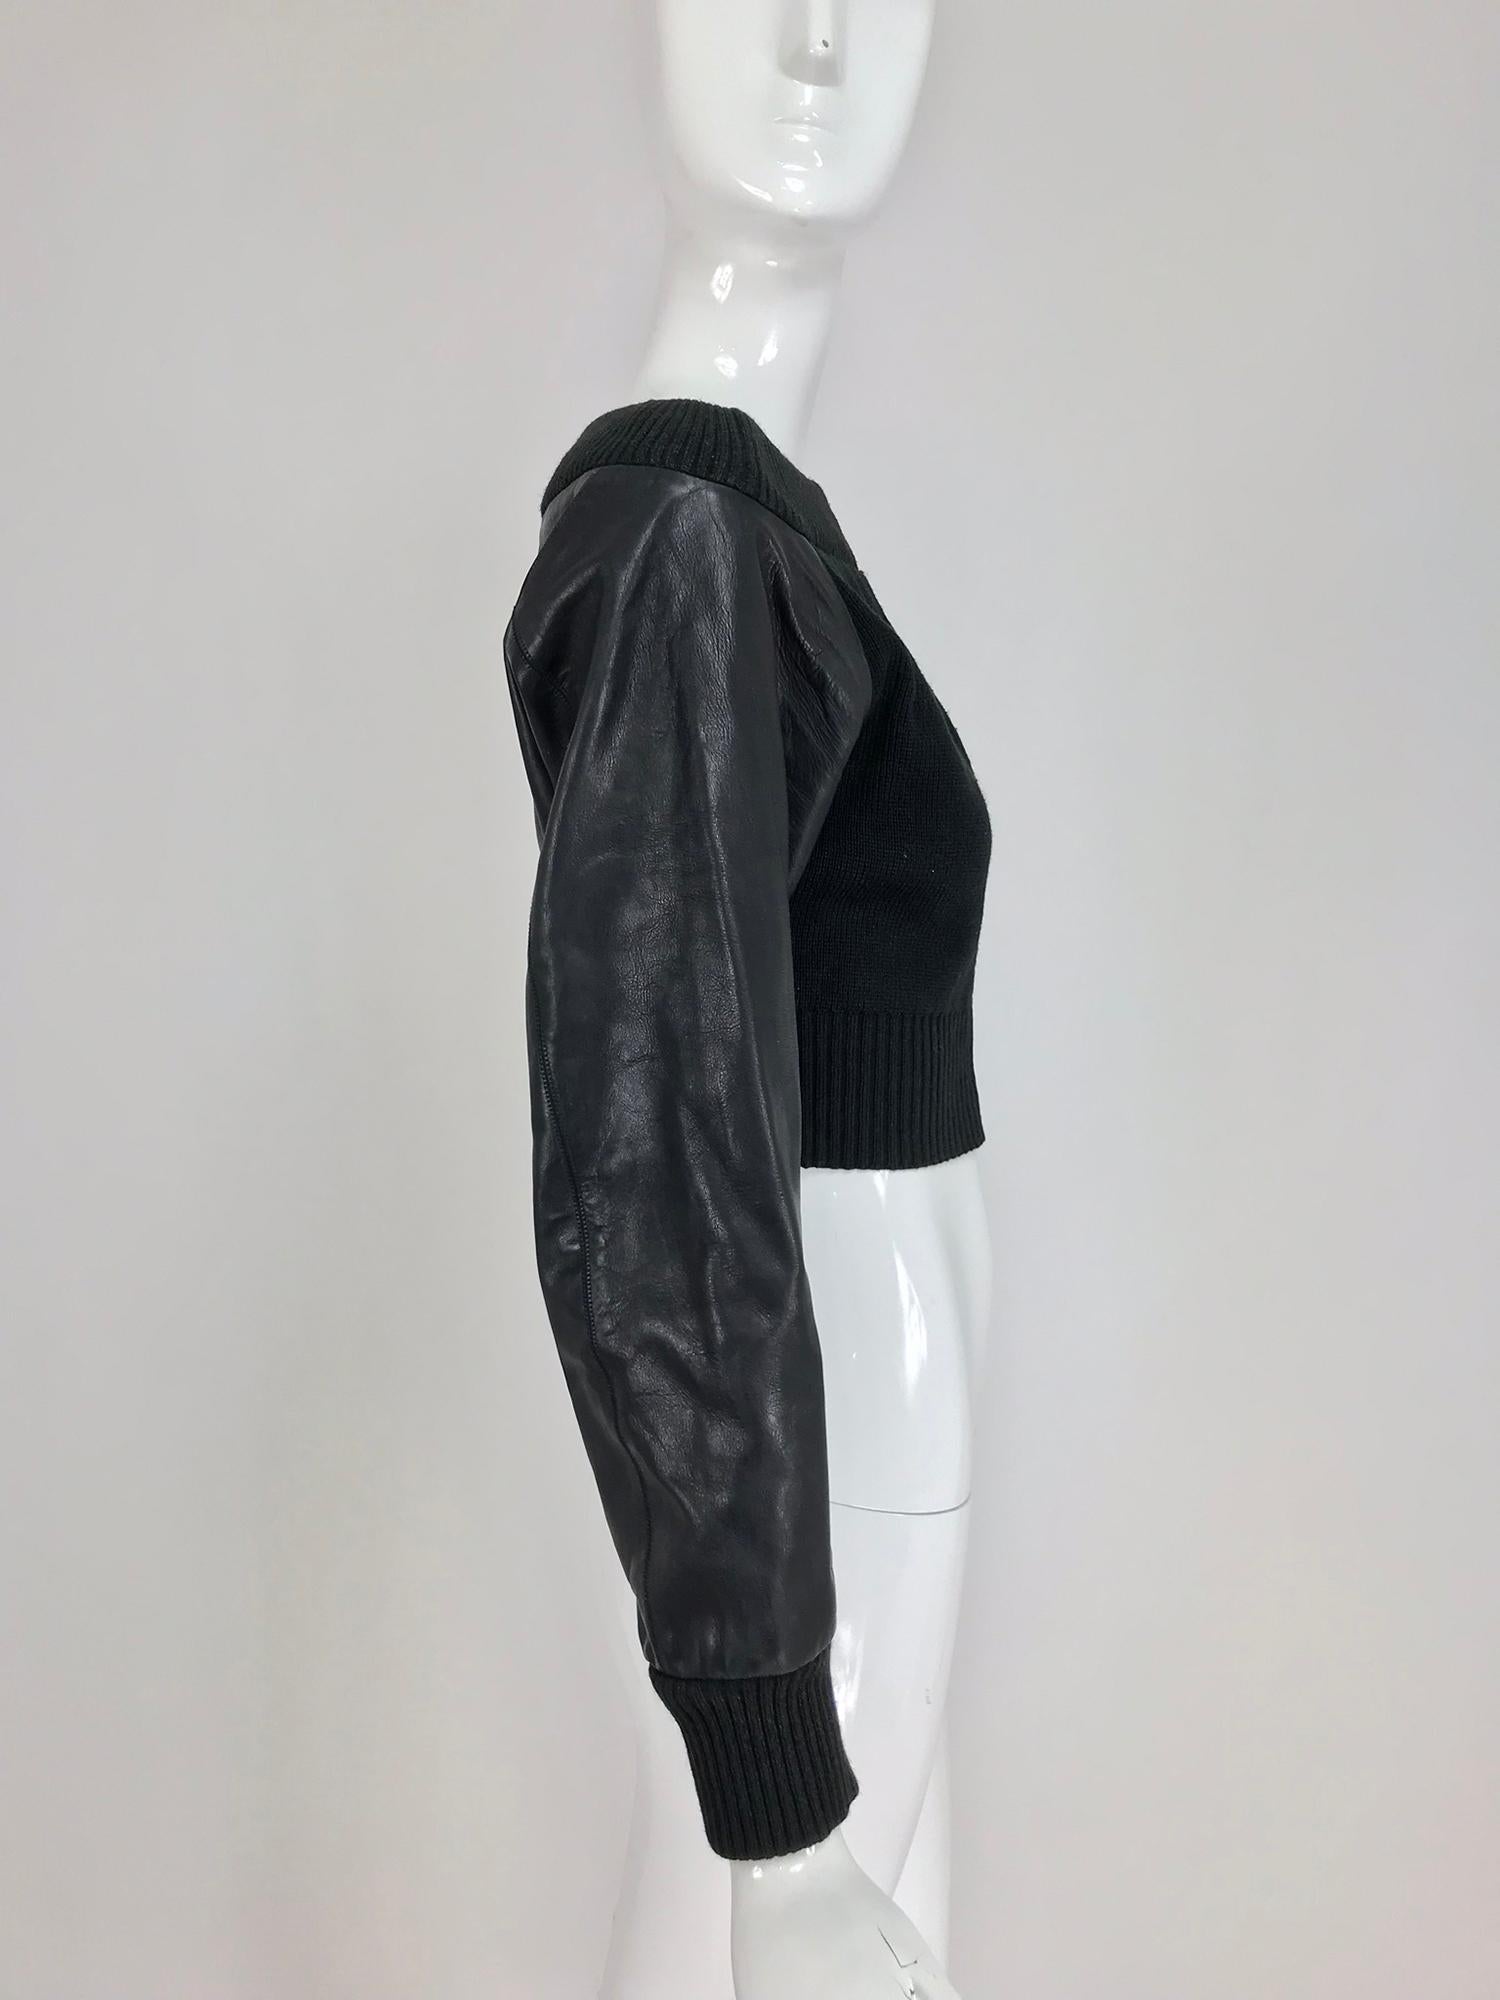 Black Jean Paul Gaultier black leather and Knit Off the Shoulder Jacket 1990s